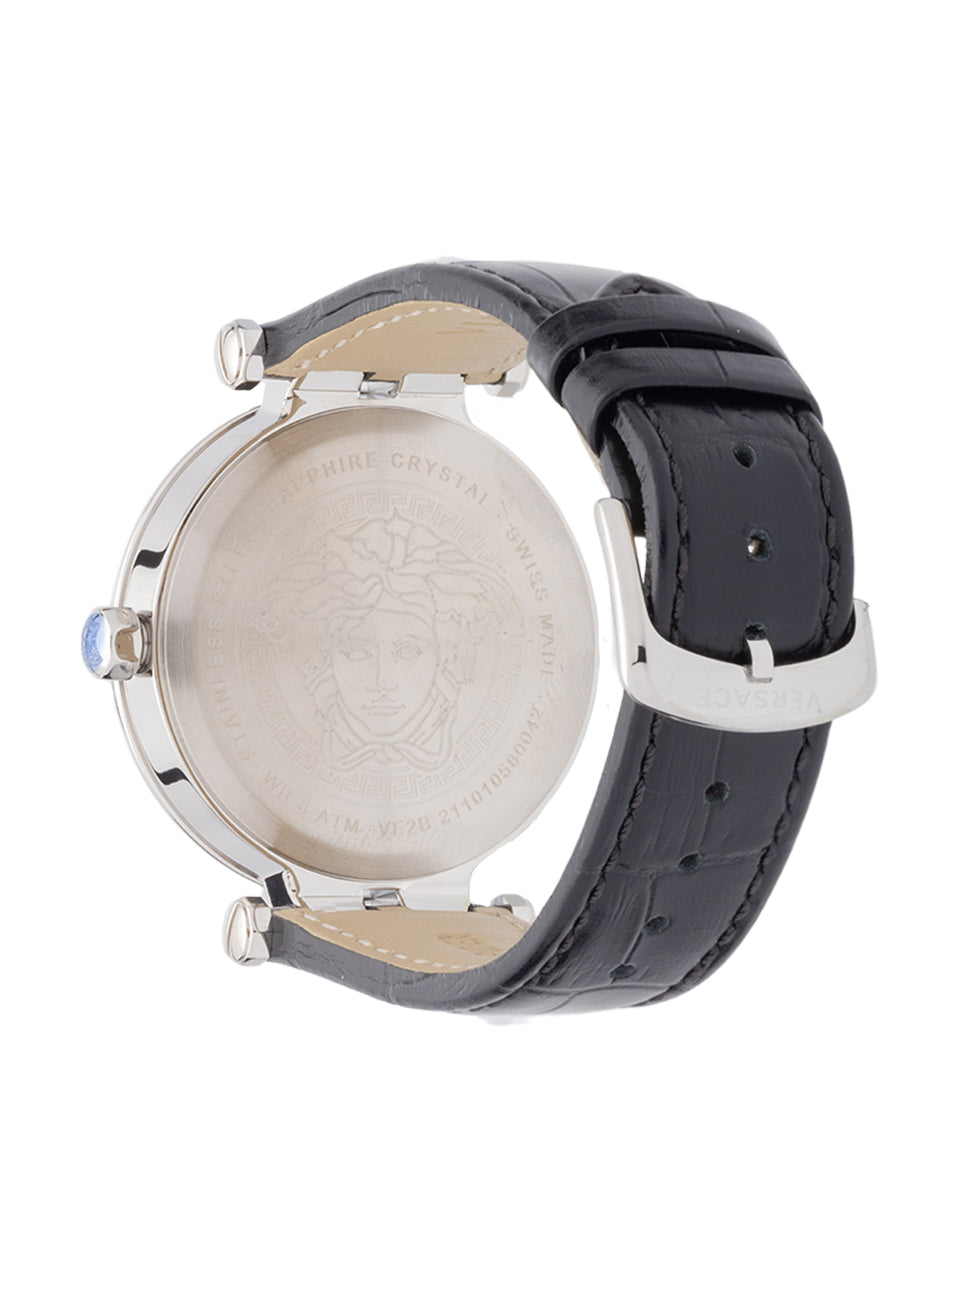 Versace Men's V Race Quartz Watch Silver/Black 43mm VE2B00121